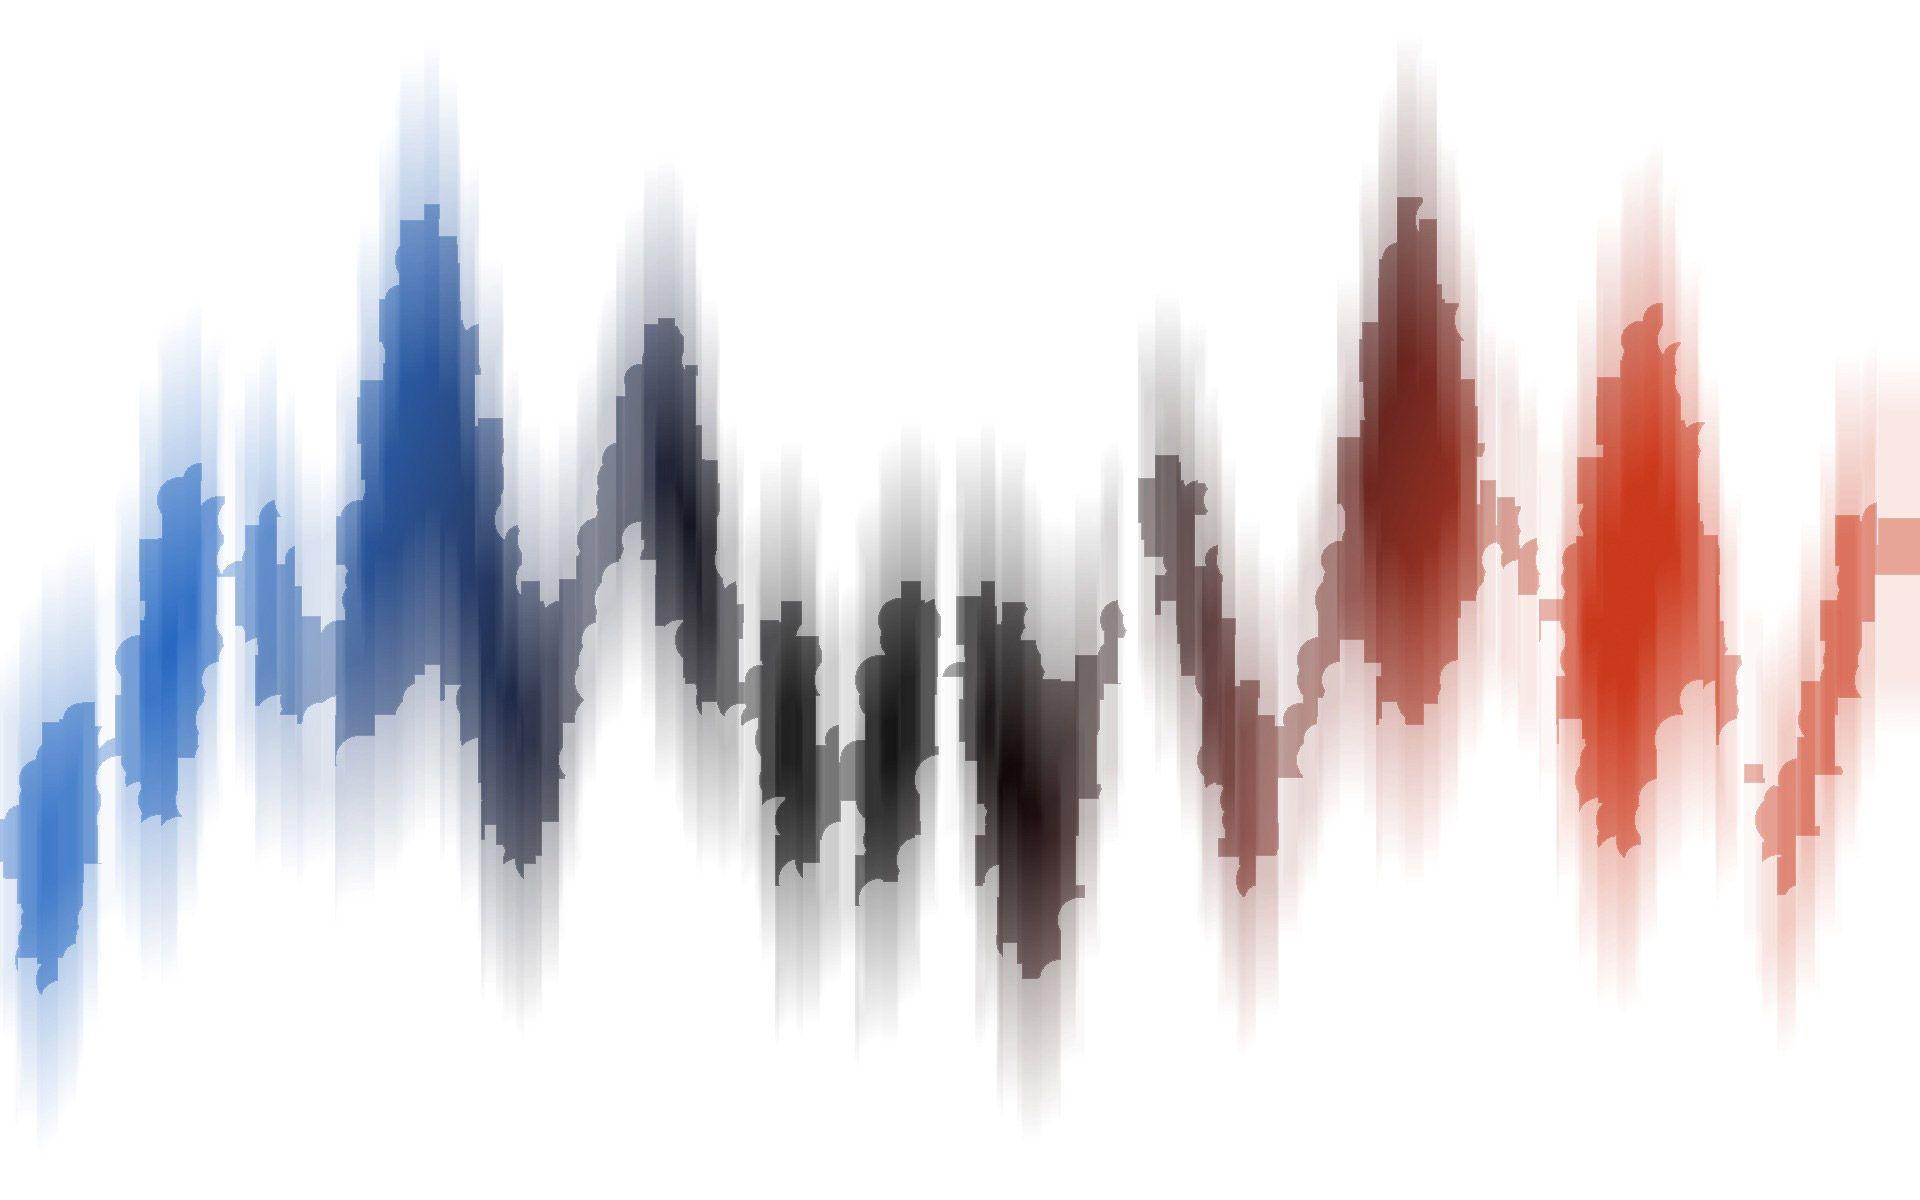 sound wave Wallpaper for PCs, Laptops